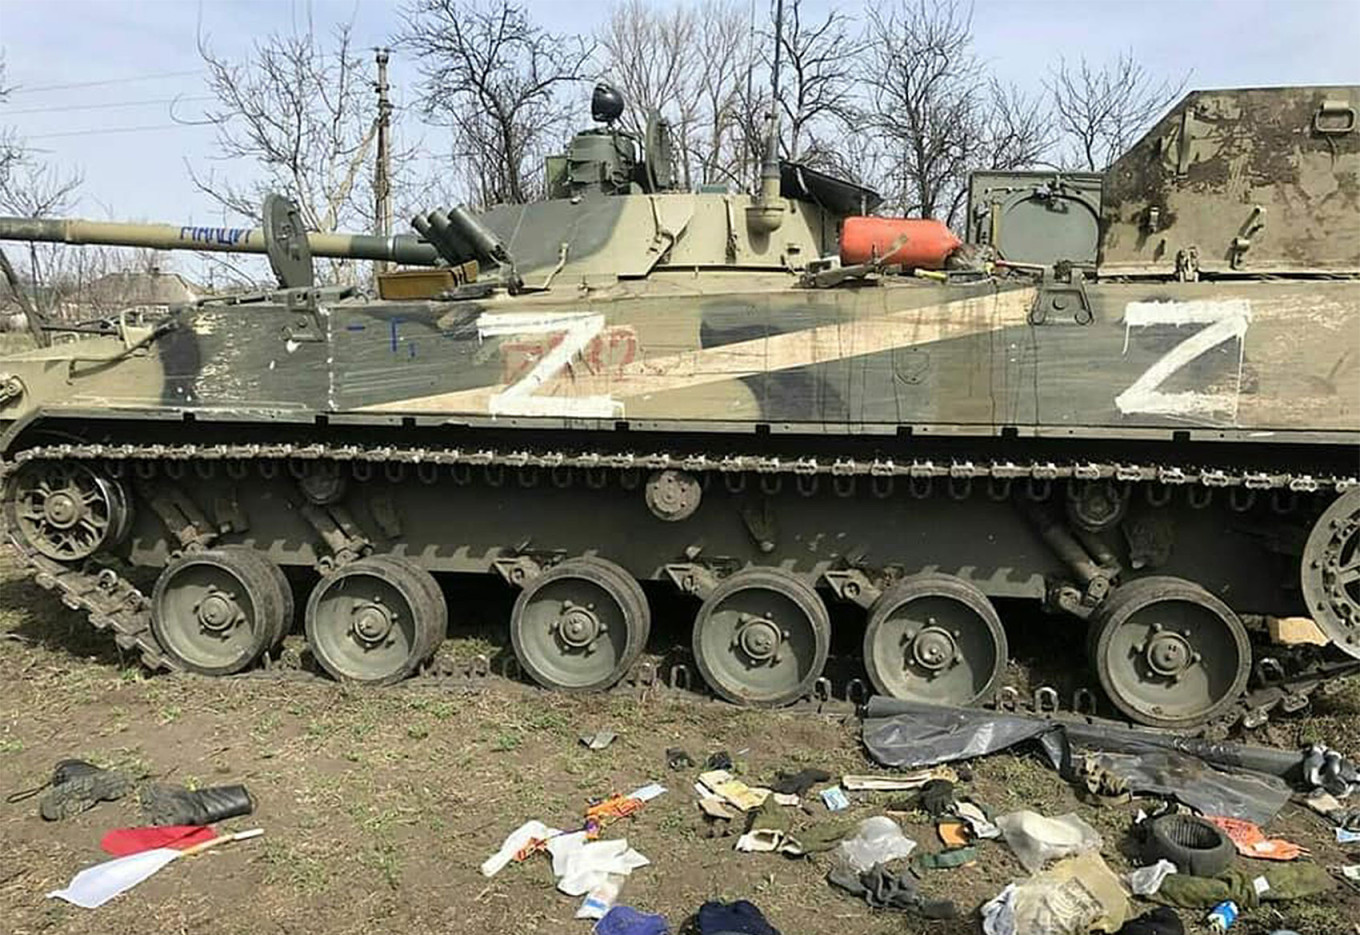 
					Damaged Russian military vehicle in Donetsk region.					 					armyinform.com.ua (CC BY 4.0)				